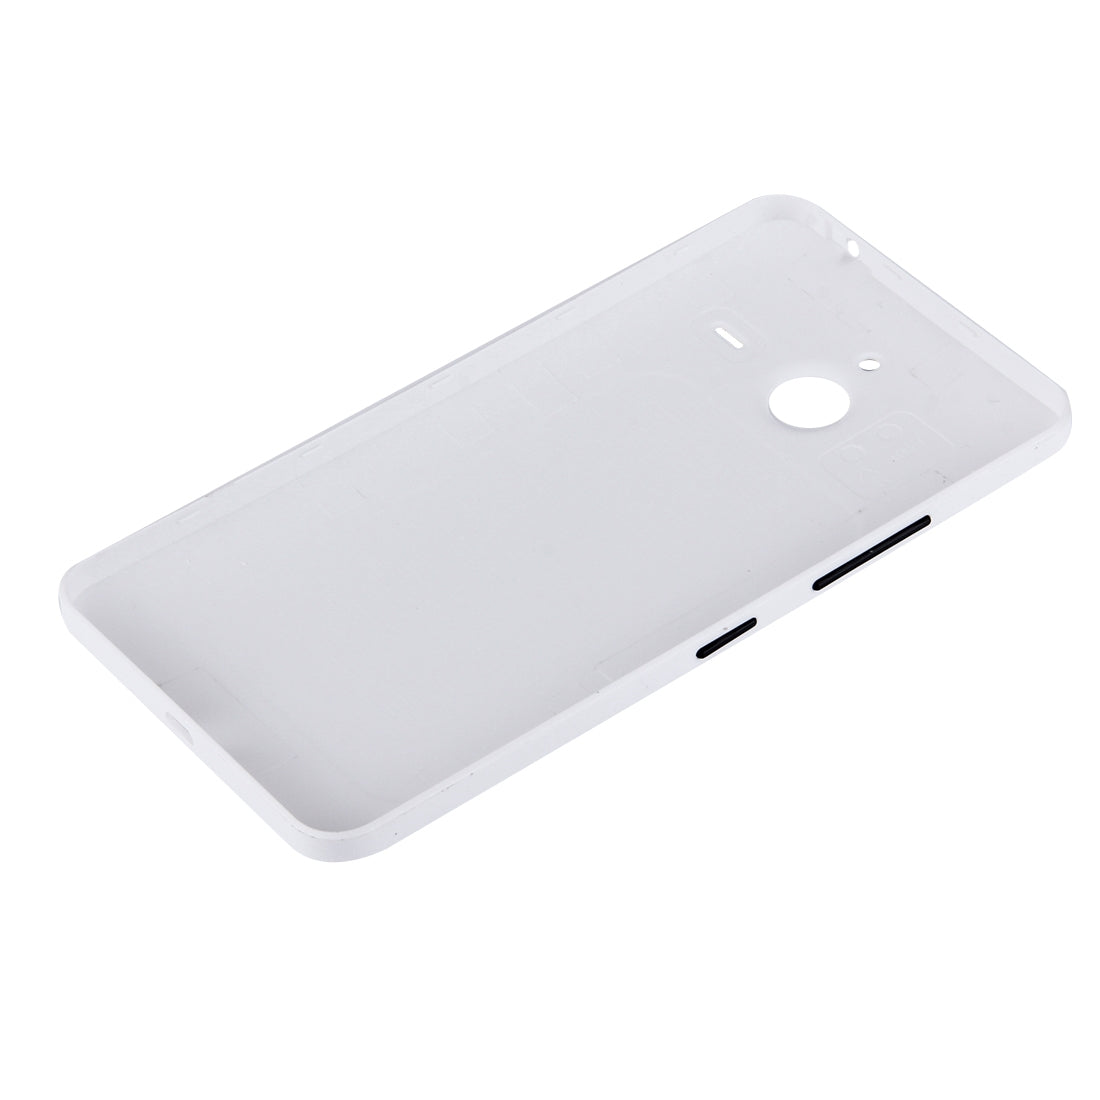 Battery Cover Back Cover Microsoft Lumia 640 XL White